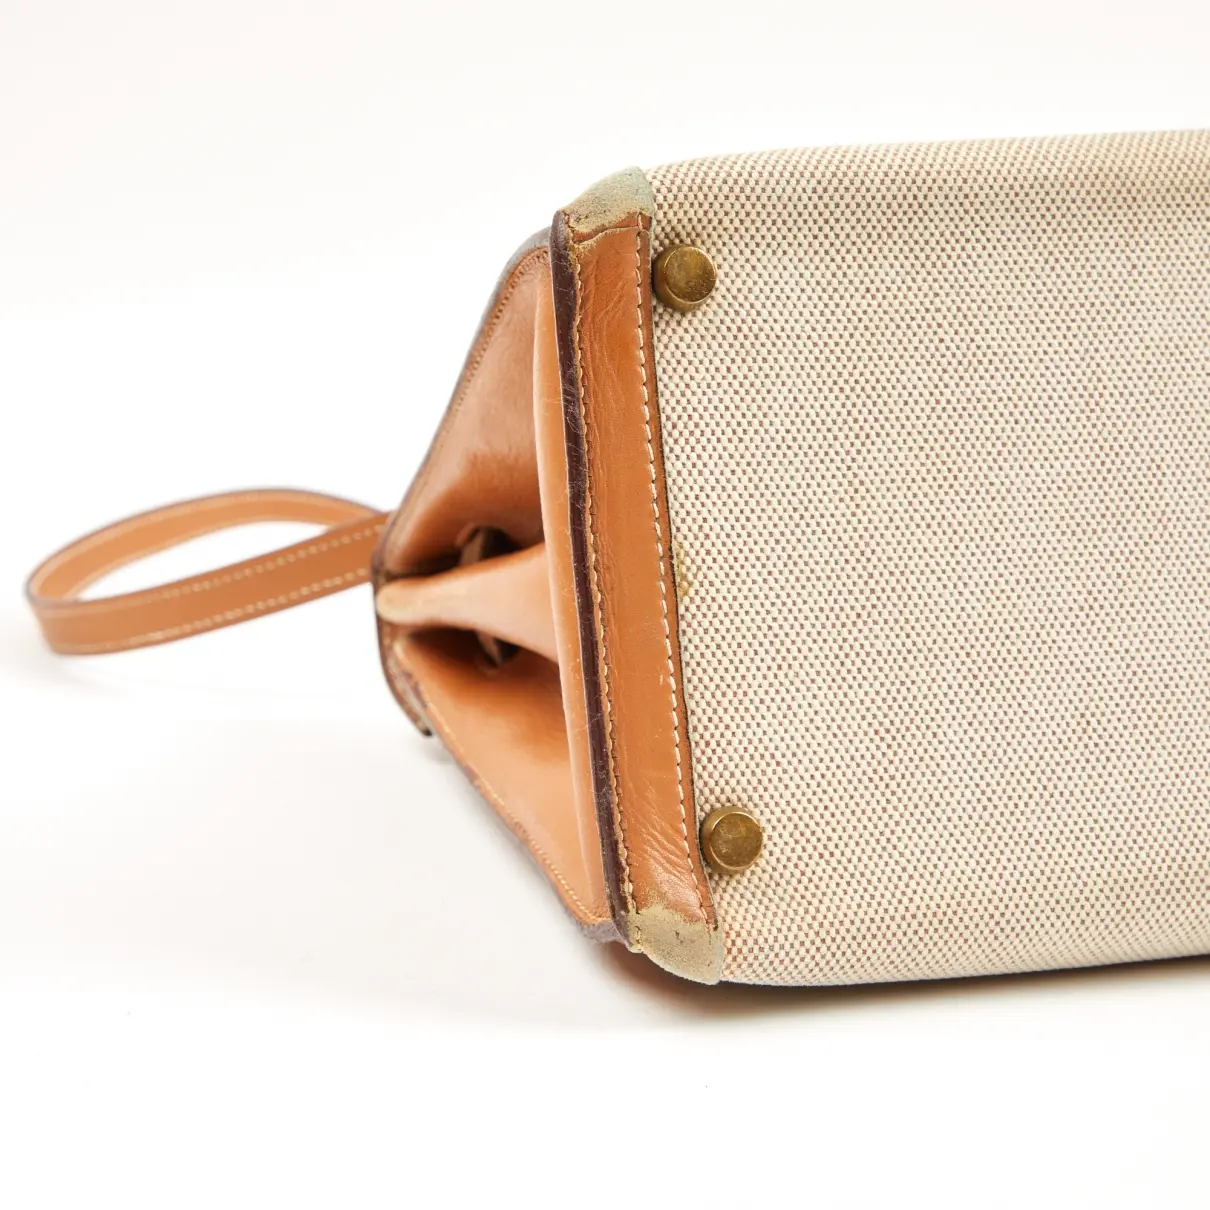 Kelly 32 cloth handbag Hermès - Vintage